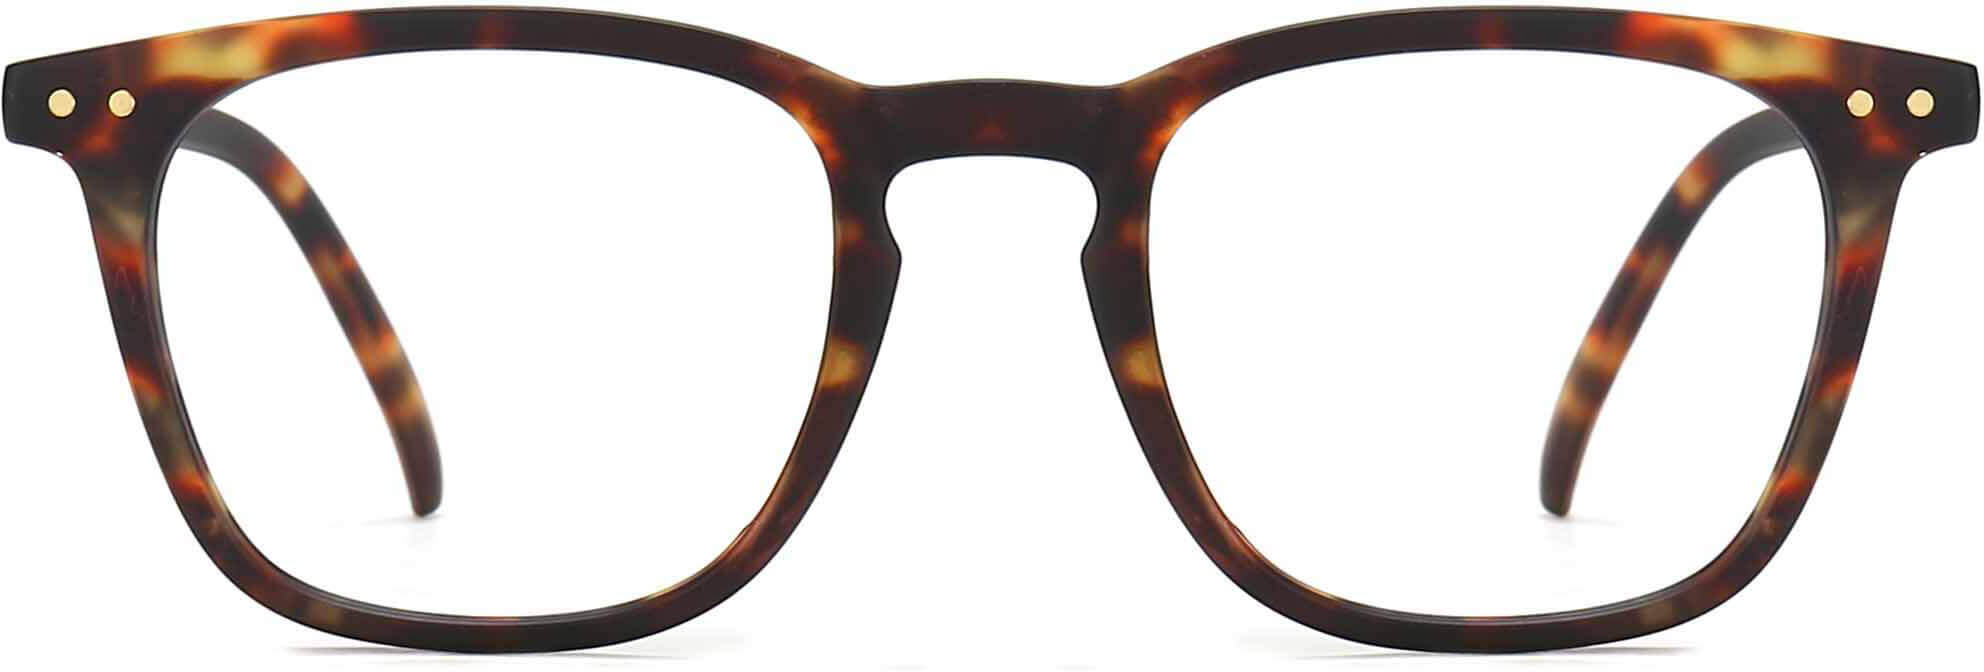 Barrett Square Tortoise Eyeglasses from ANRRI, front view